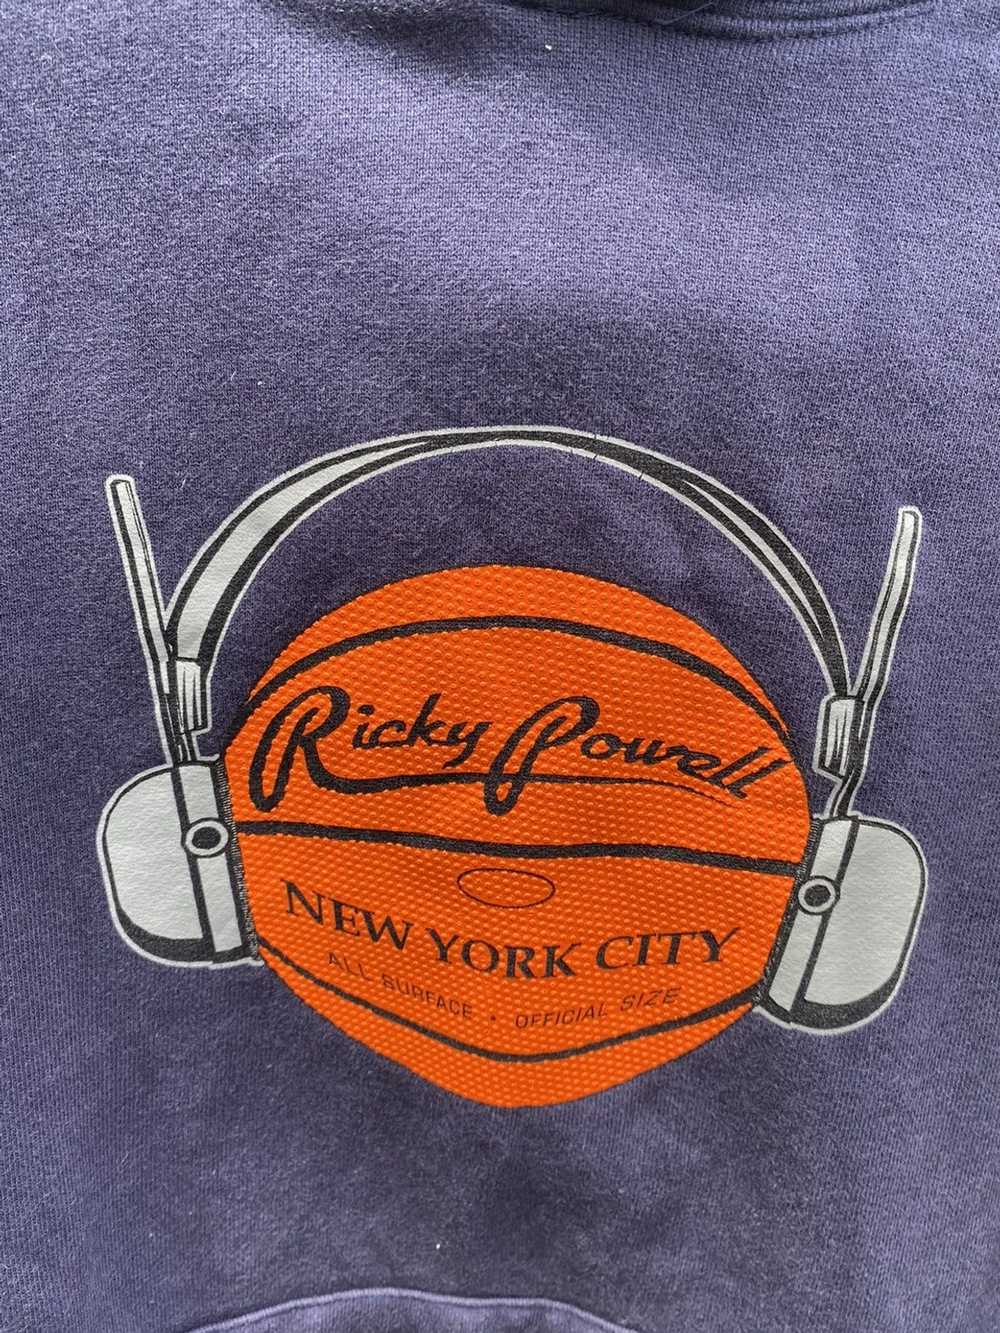 New York × Streetwear Ricky Powell New York City … - image 2